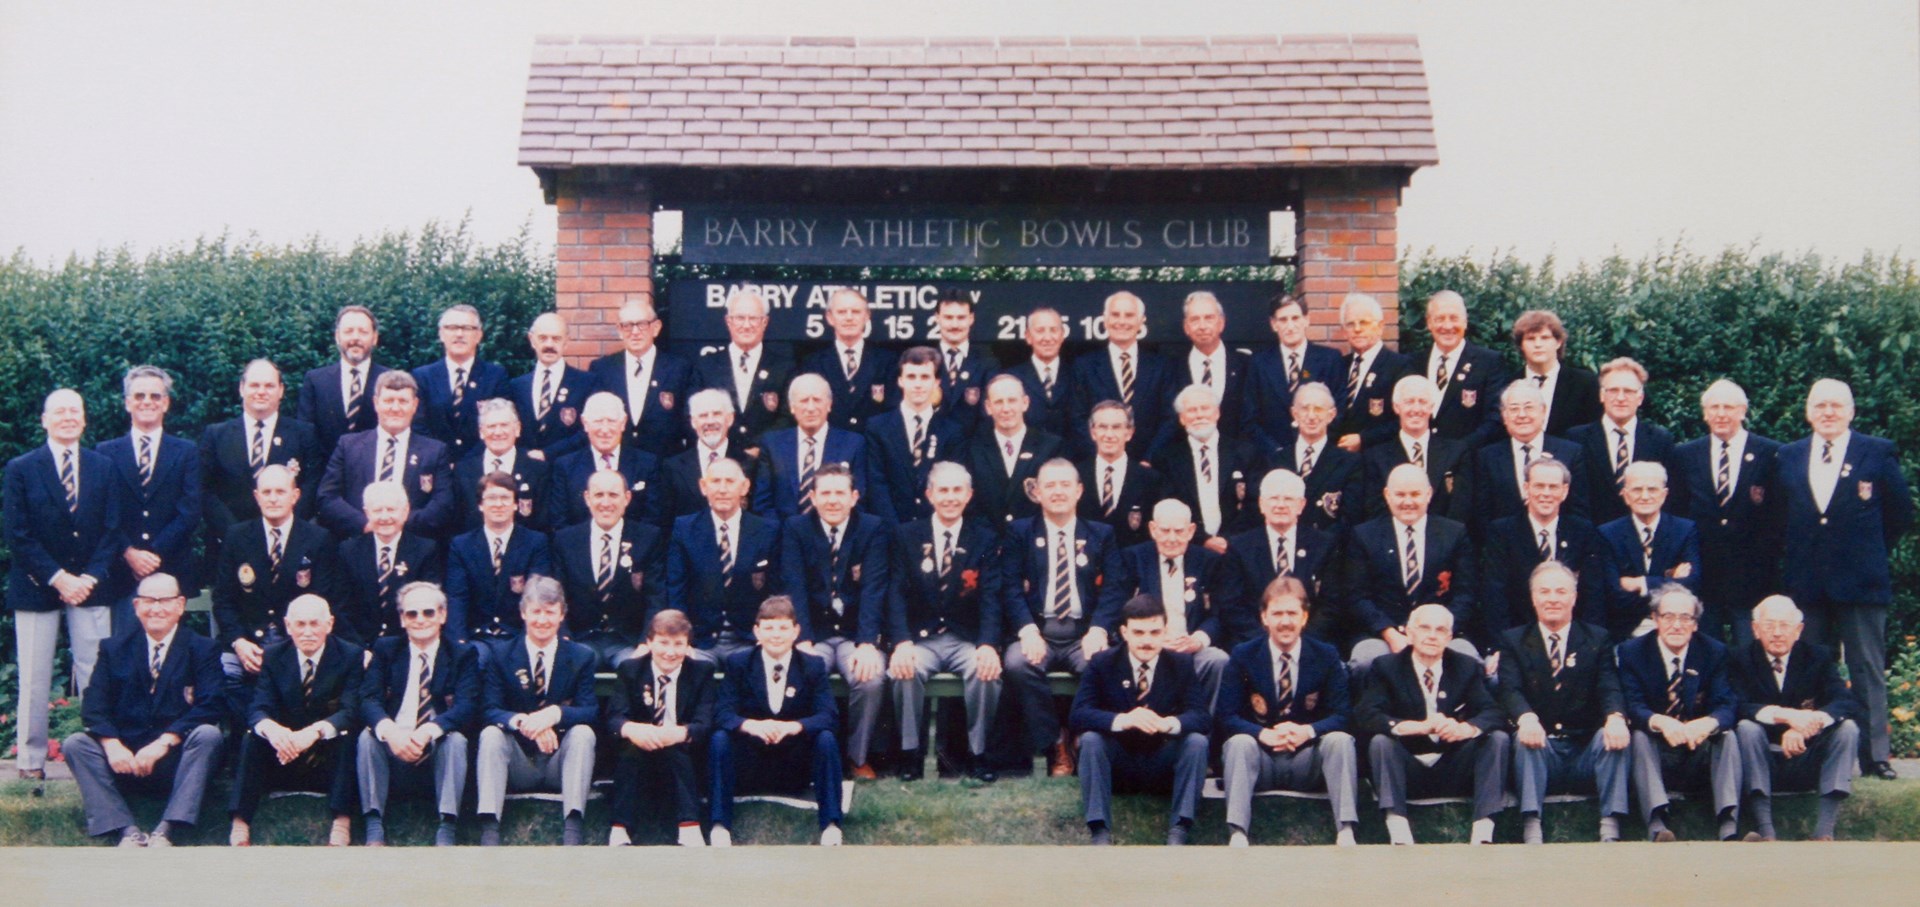 Barry Athletic Bowls Club 75th Anniversary 1986